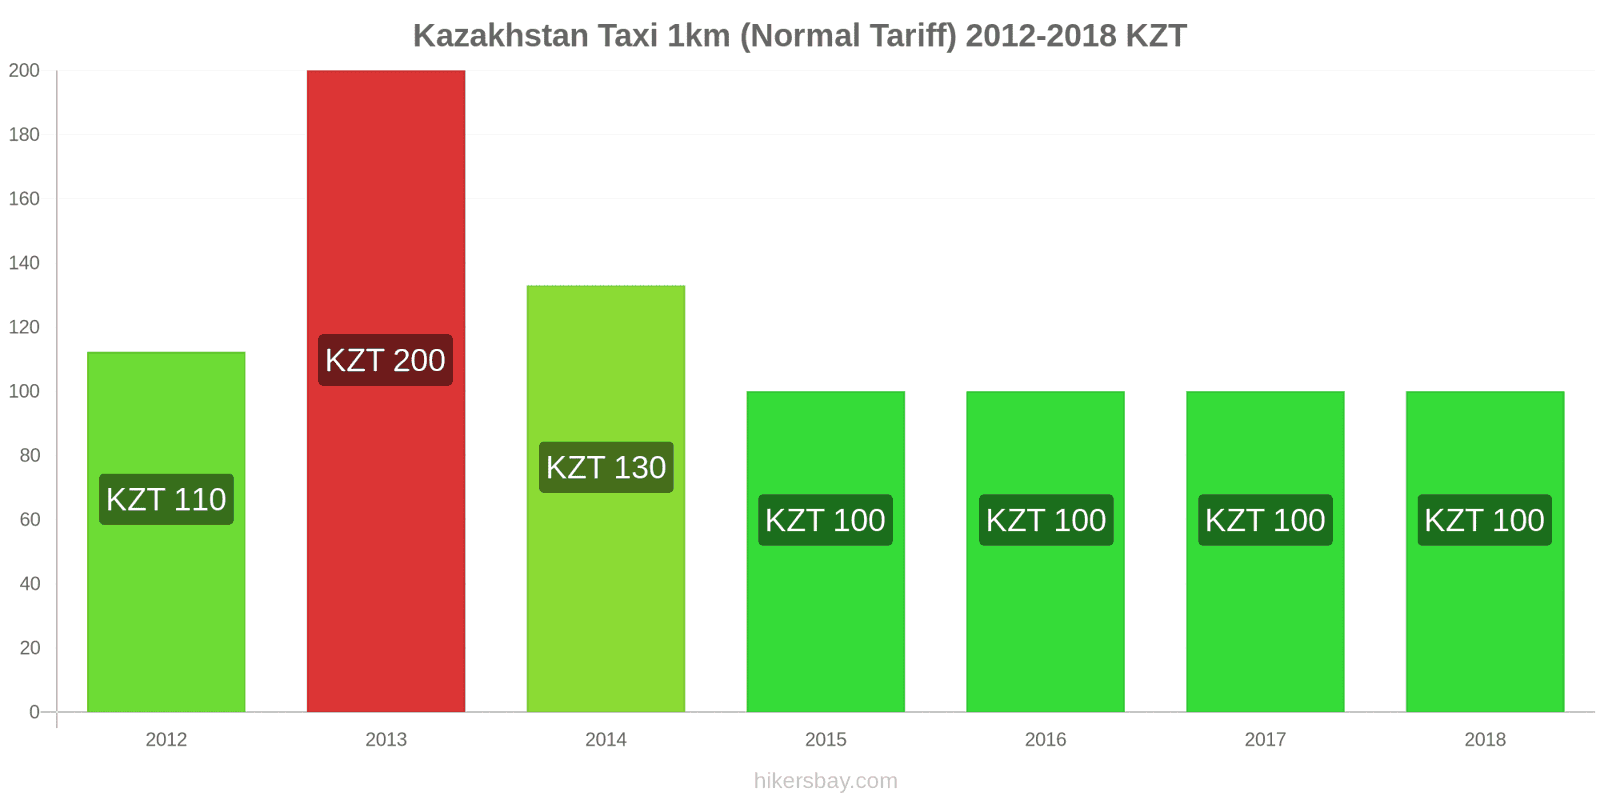 Kazakhstan price changes Taxi 1km (Normal Tariff) hikersbay.com